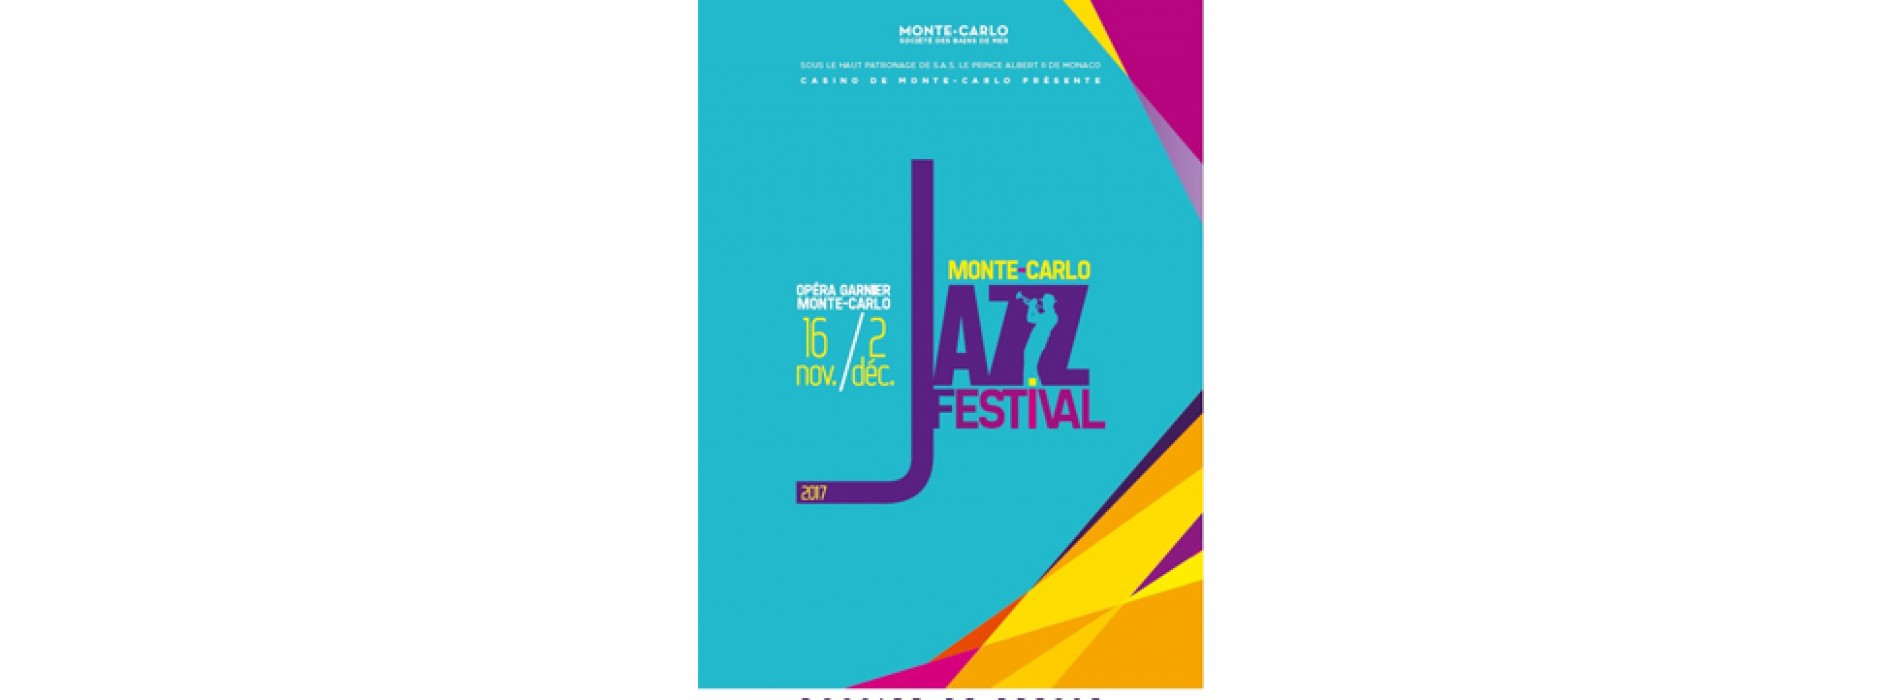 Monaco to host 12th Monte-Carlo Jazz Festival